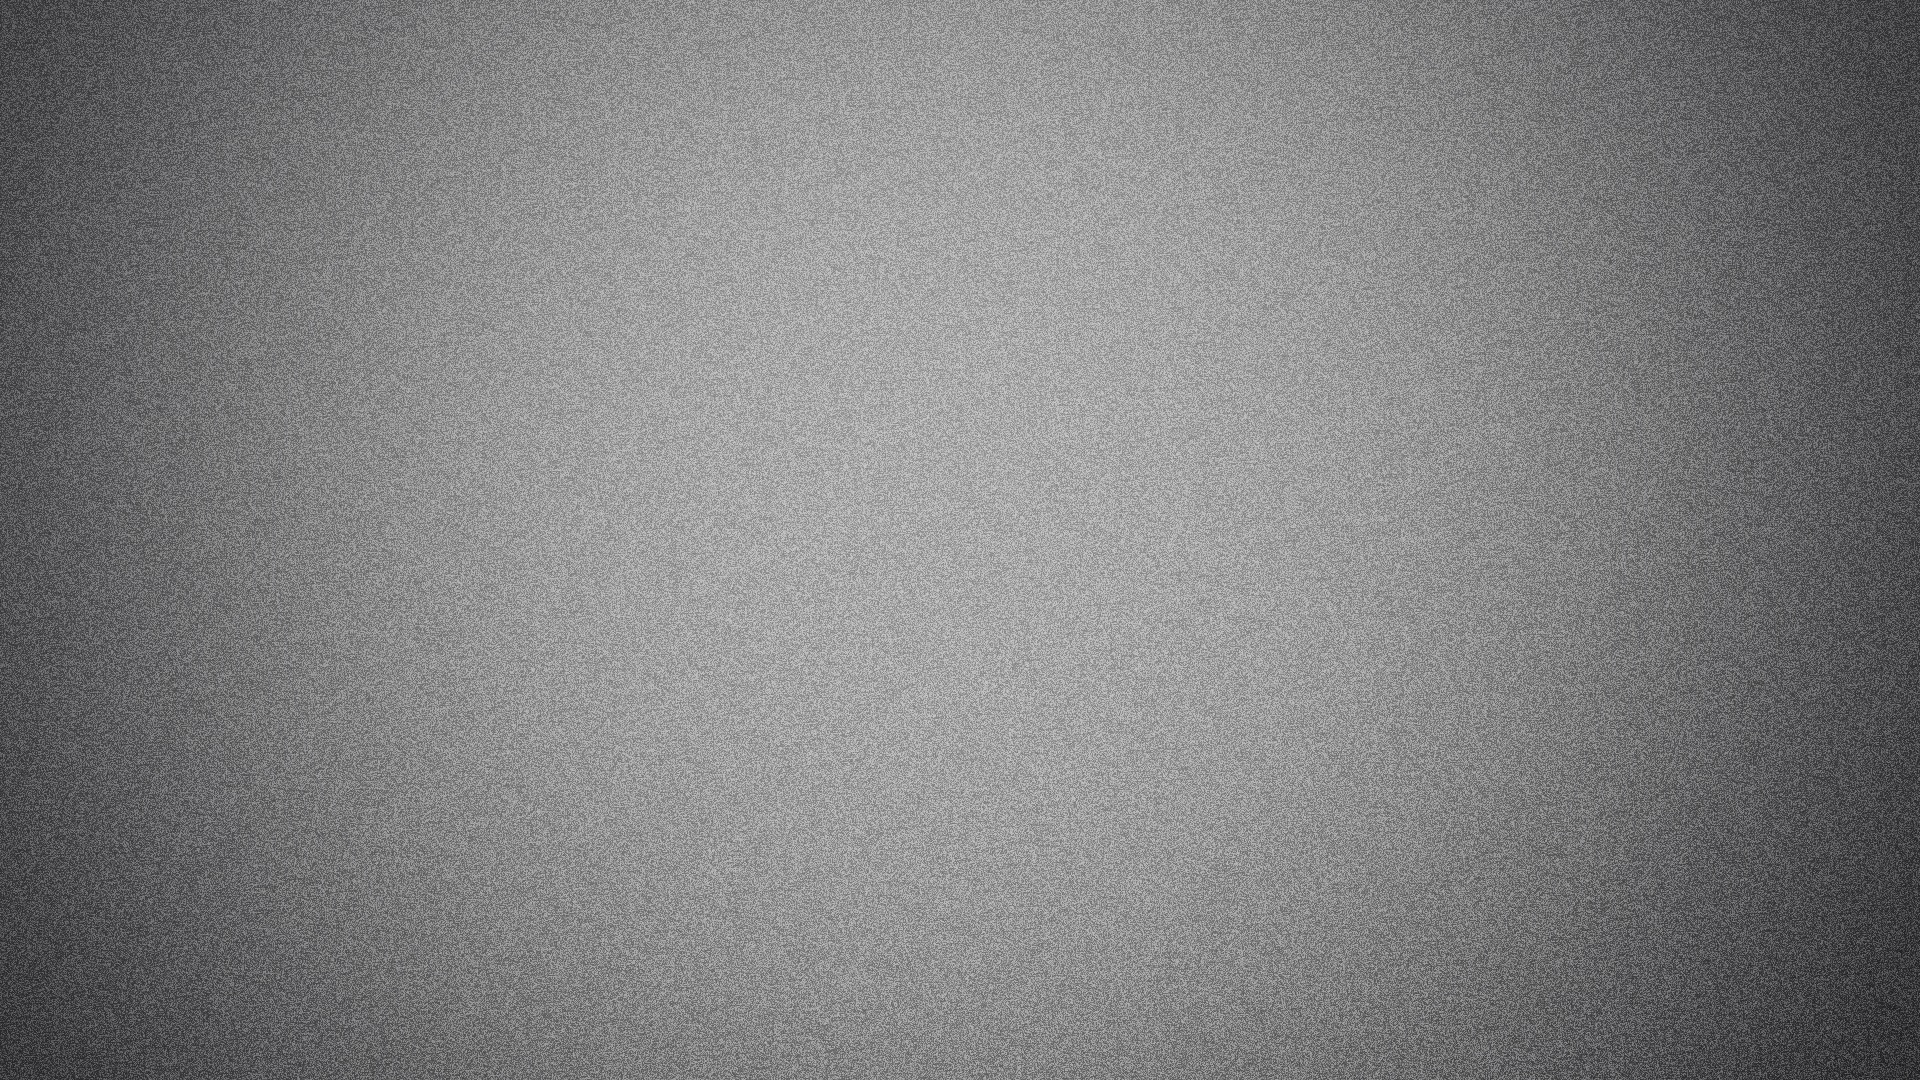 Grey Backgrounds free download | PixelsTalk.Net